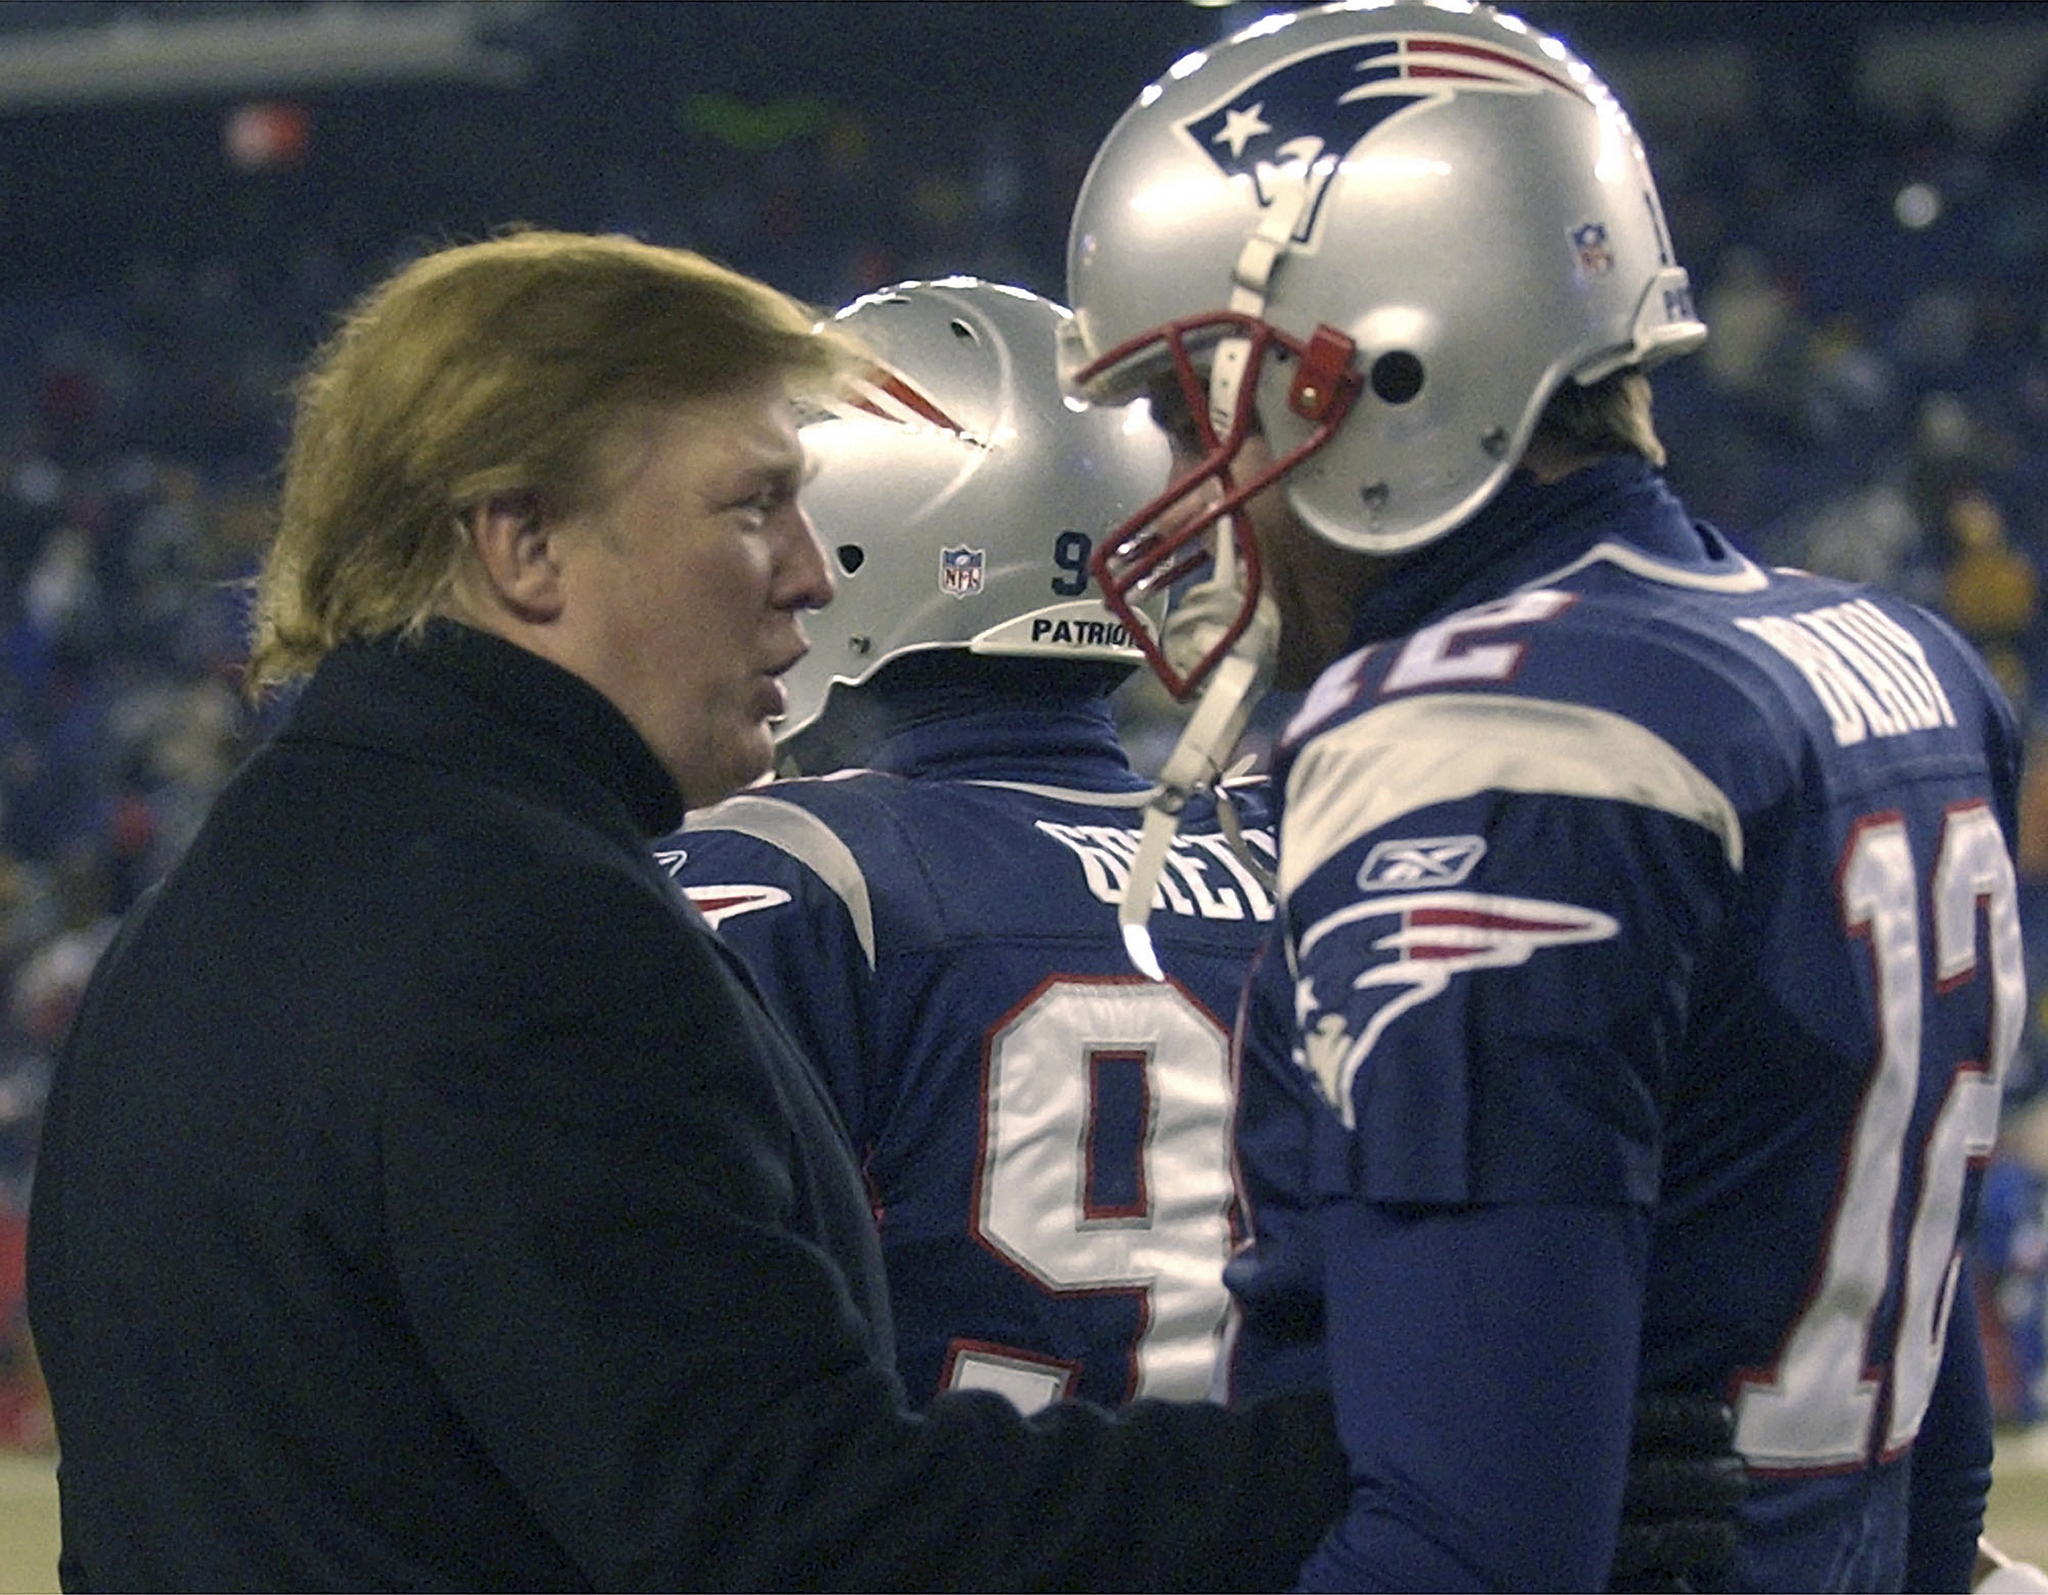 Donald Trump and New England Patriots quarterback Tom Brady in 2004